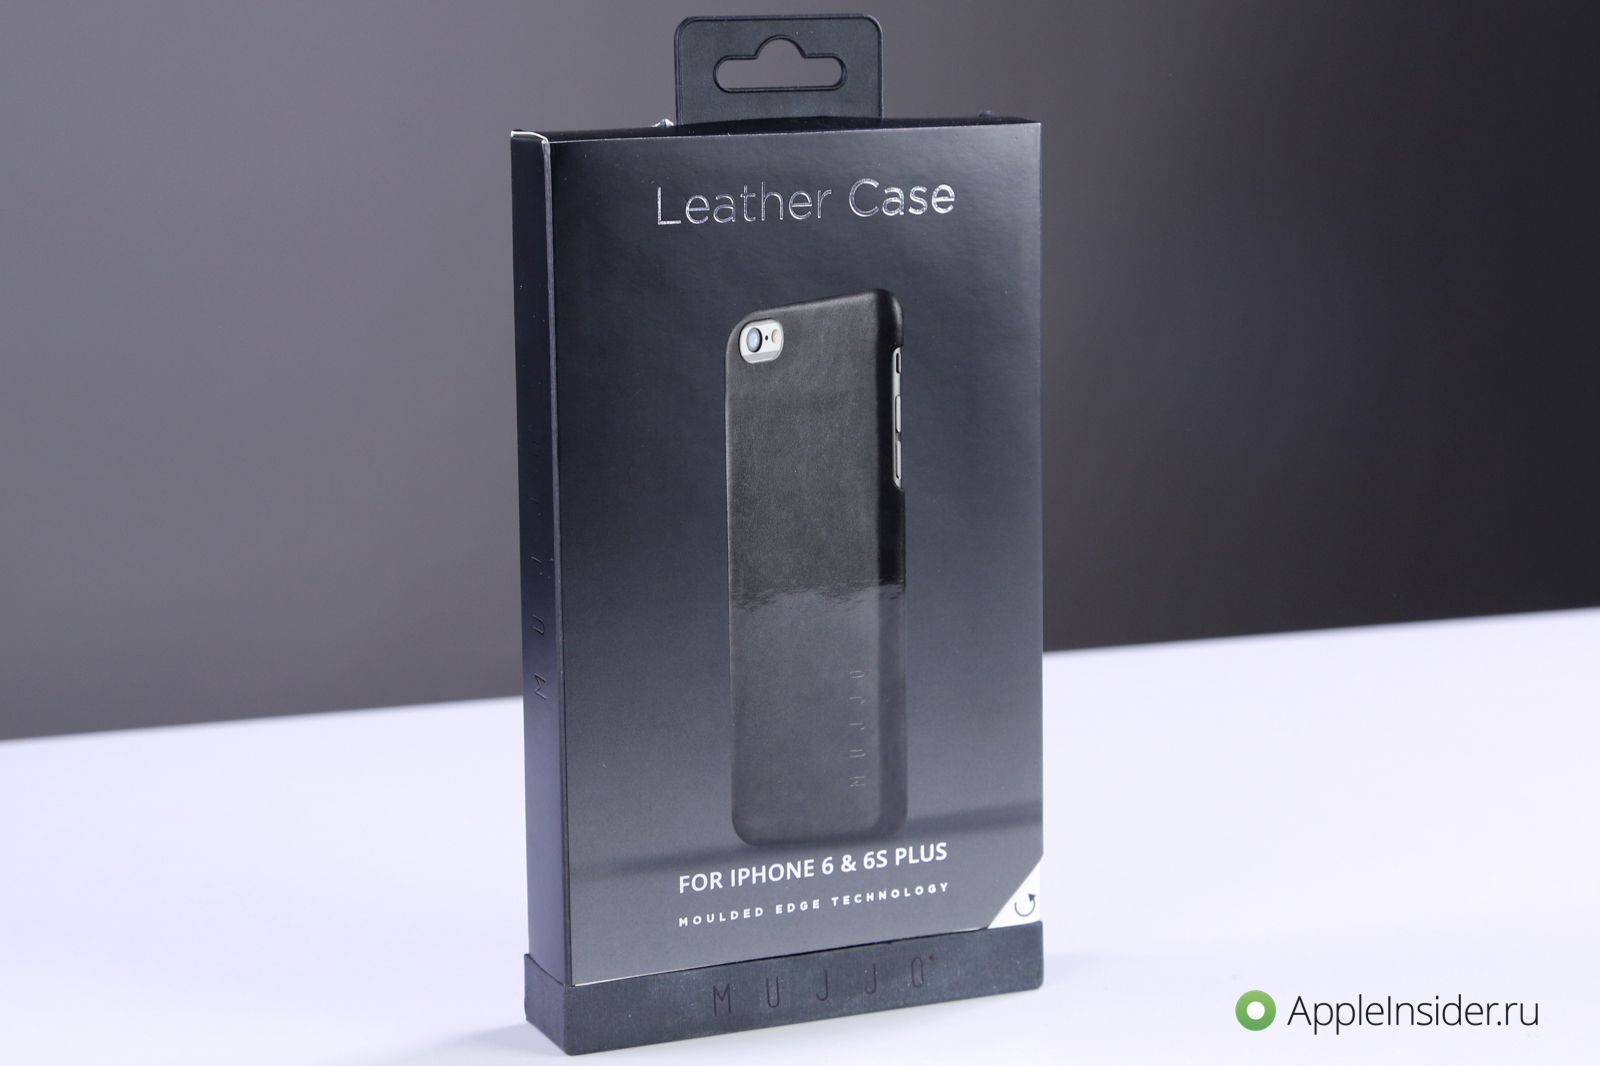 Mujjo Leather Case